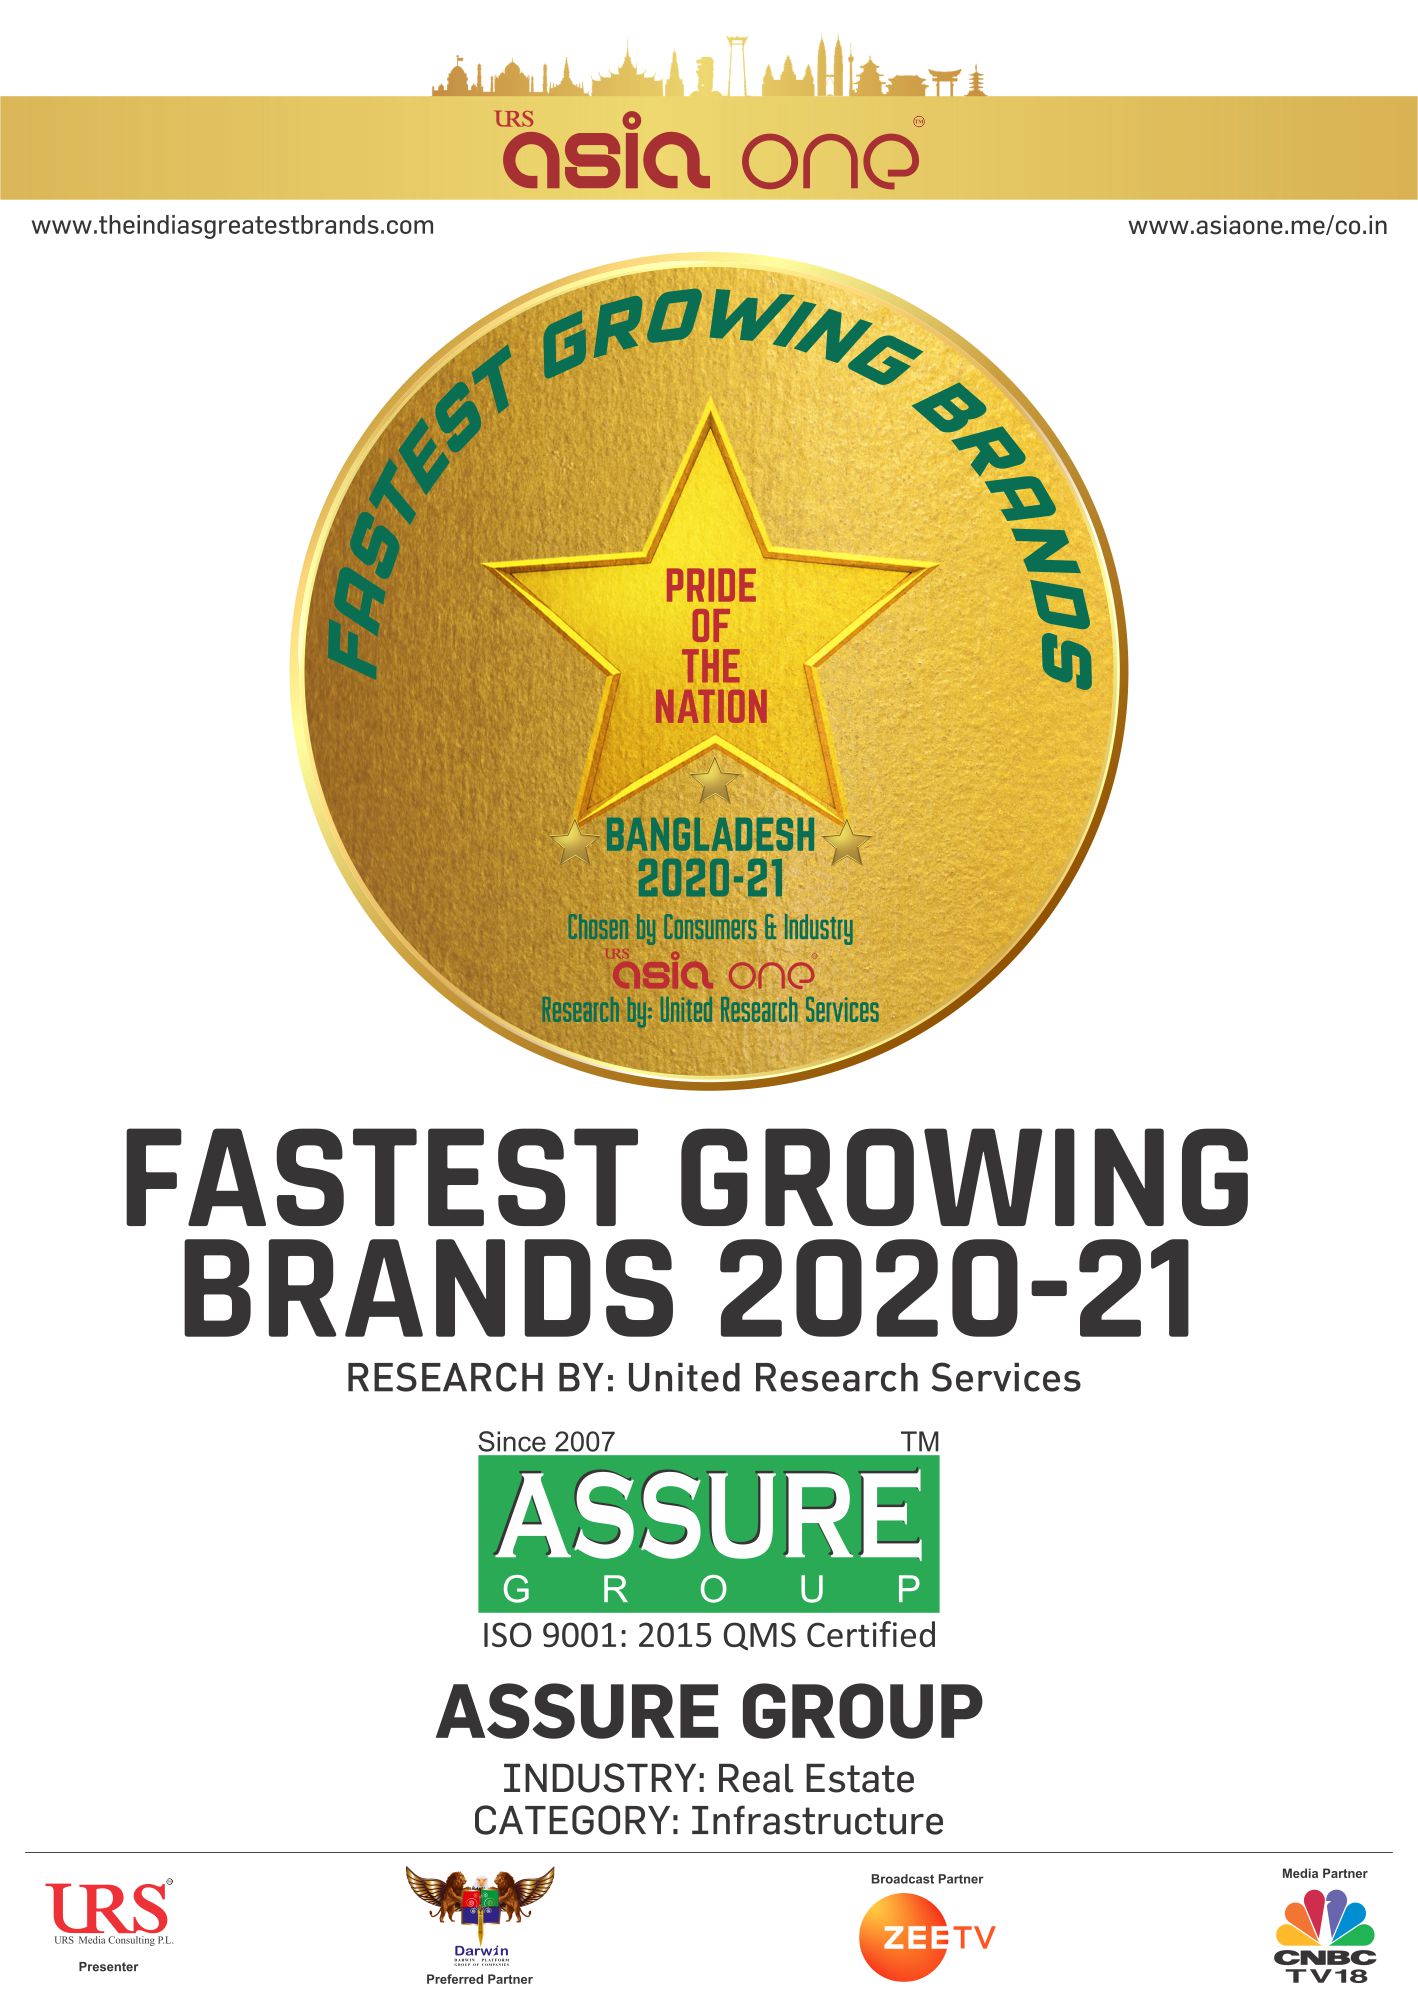 AsiaOne's Award 2020-21